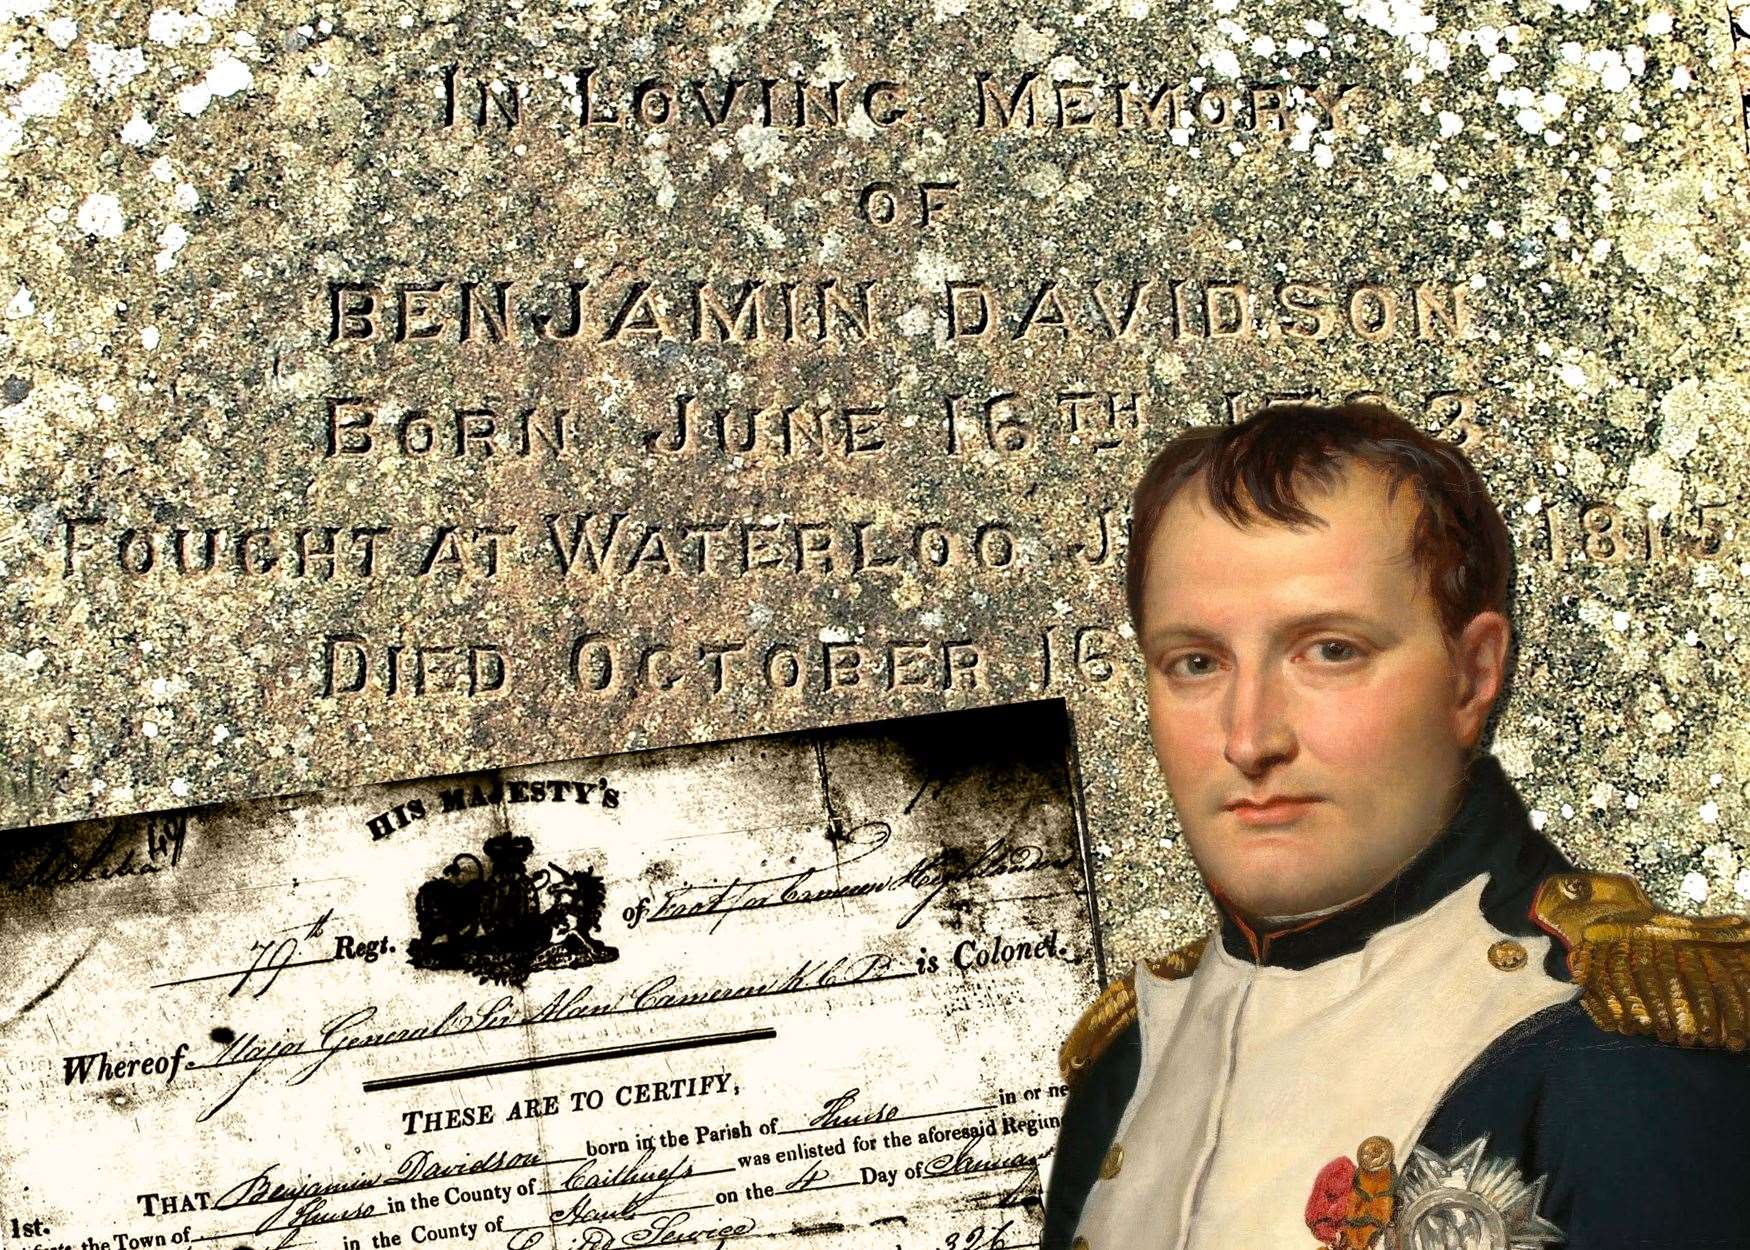 Davidson’s gravestone marking his final resting place, his service records and Napoleon Bonaparte.